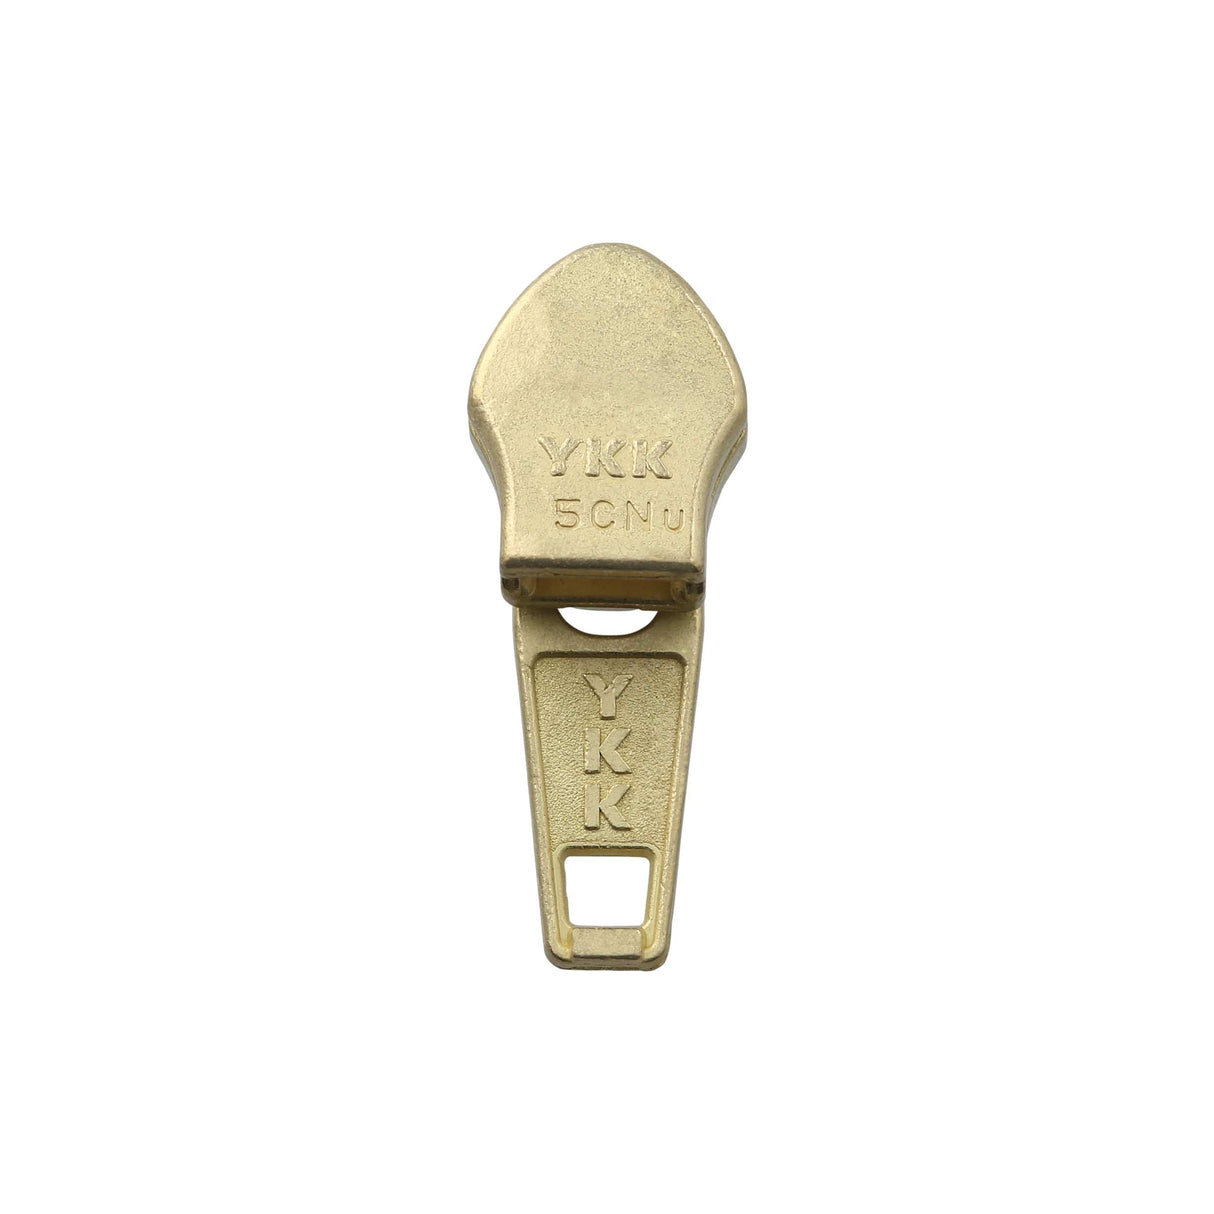 Ohio Travel Bag Zippers #5 Brass, YKK Short Tab Auto Lock Slider, Zinc Alloy, #5CN-3-BP 5CN-3-BP